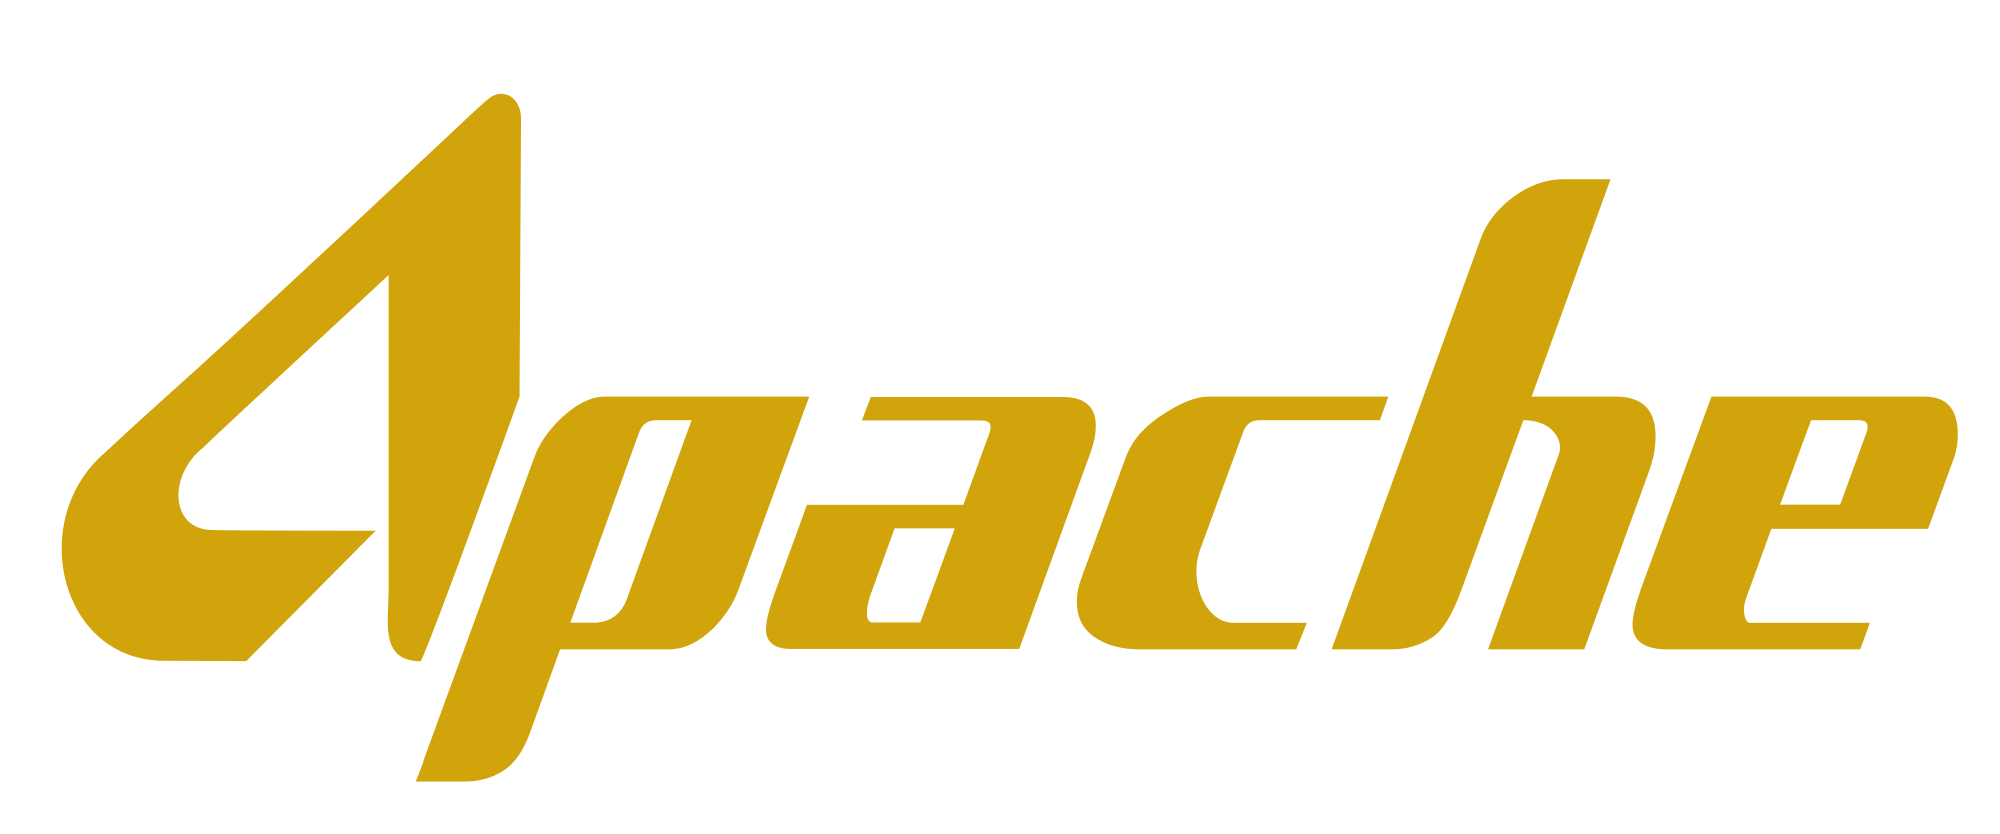 Yellow Corp Logo - ApacheLogo.svg